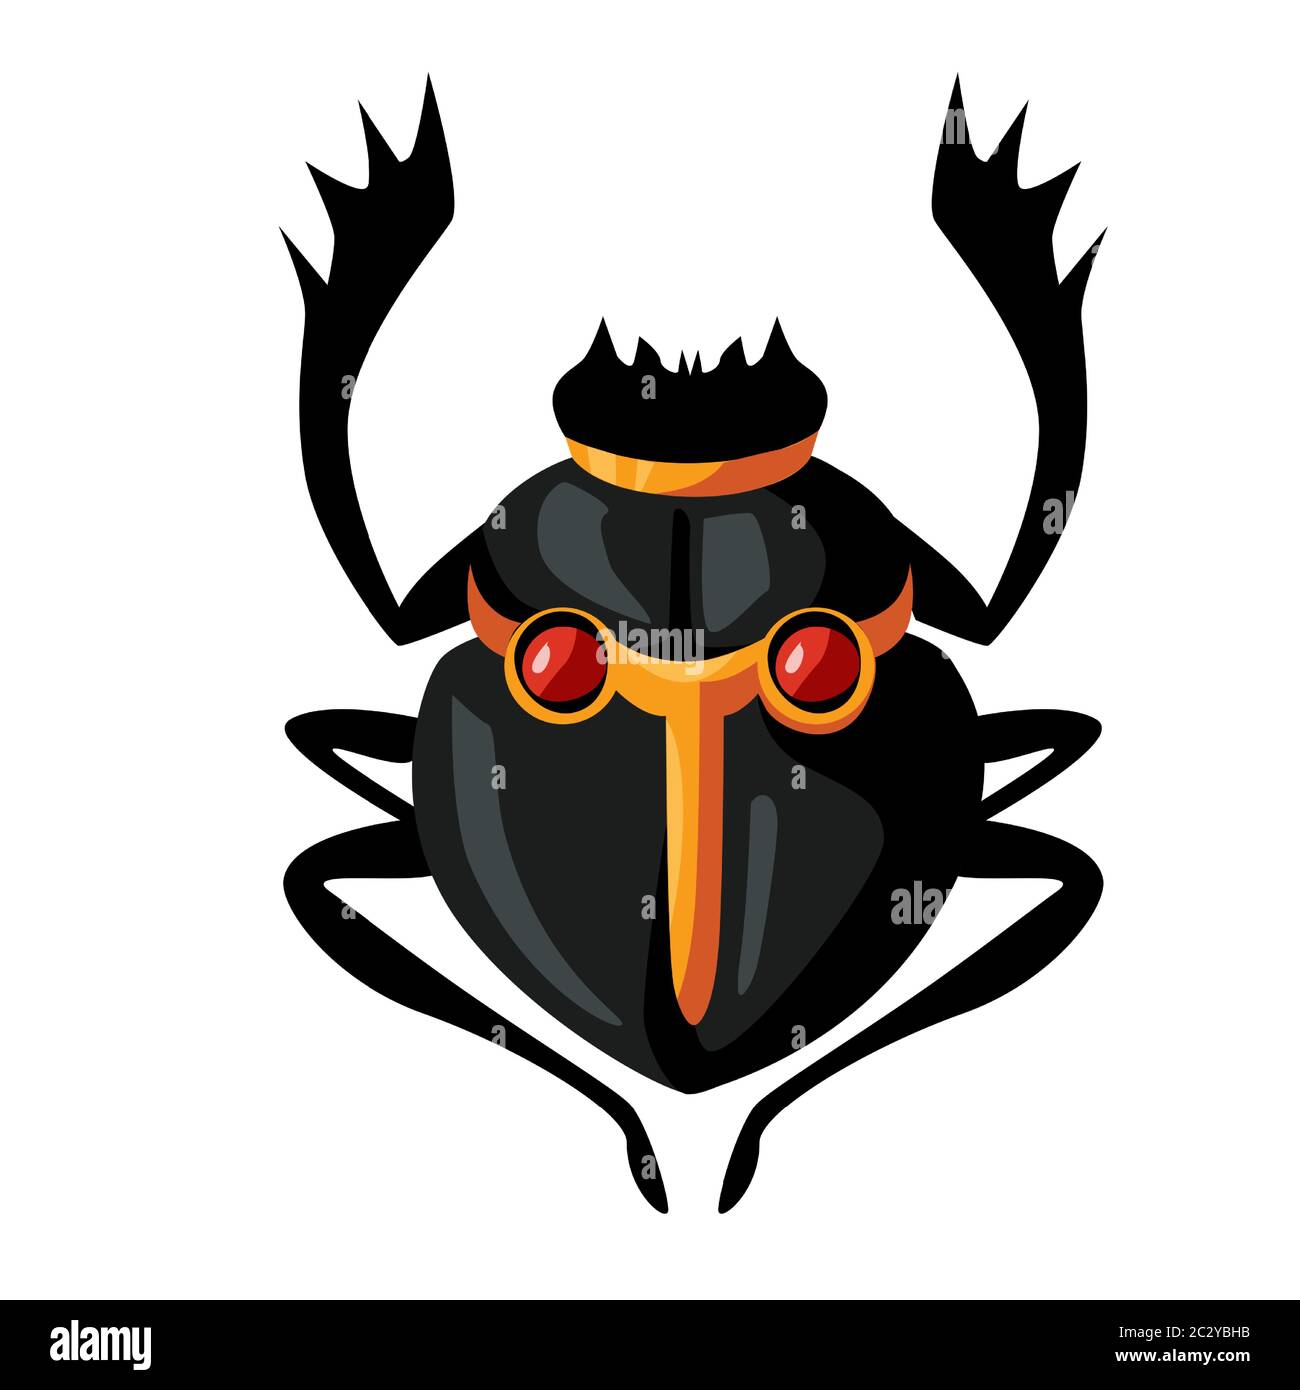 Alte Ägypten Skarabäus Käfer Cartoon Vektor. Ägyptische Kultur Religiöses Symbol, schwarze Insektenfigur, Verkörperung des aufgehenden oder Morgensonne-gottes Khepri Stock Vektor